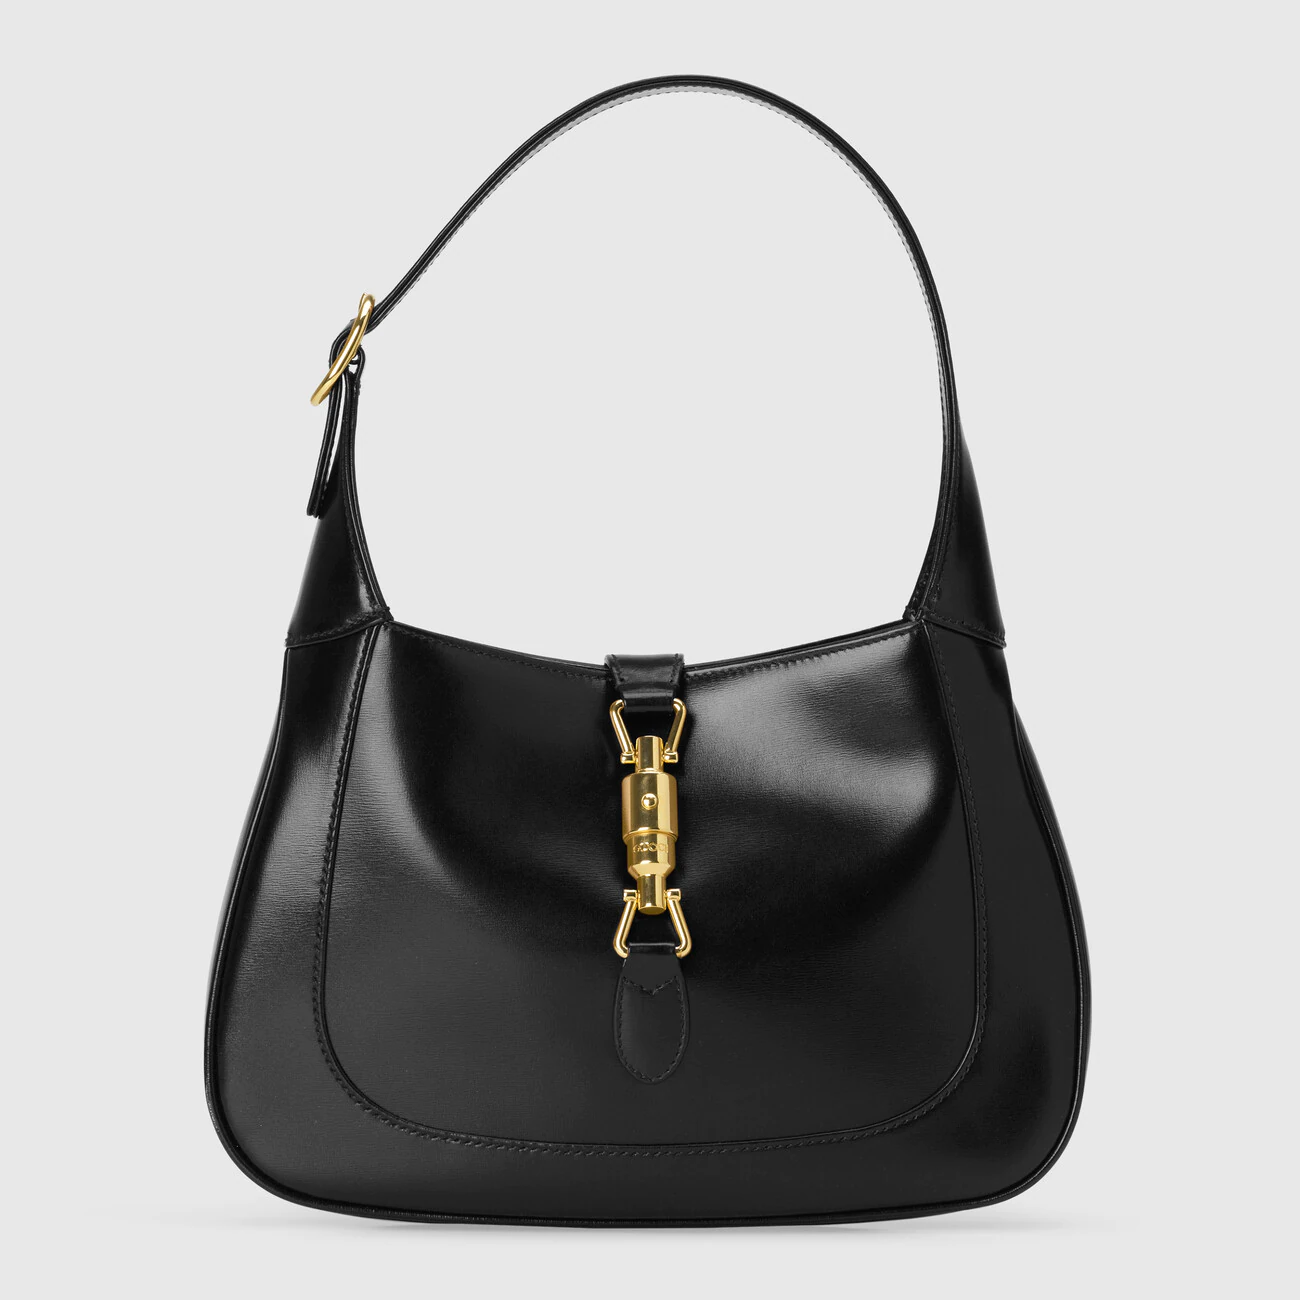 The Dupont Riviera handbag in honor of Audrey Hepburn